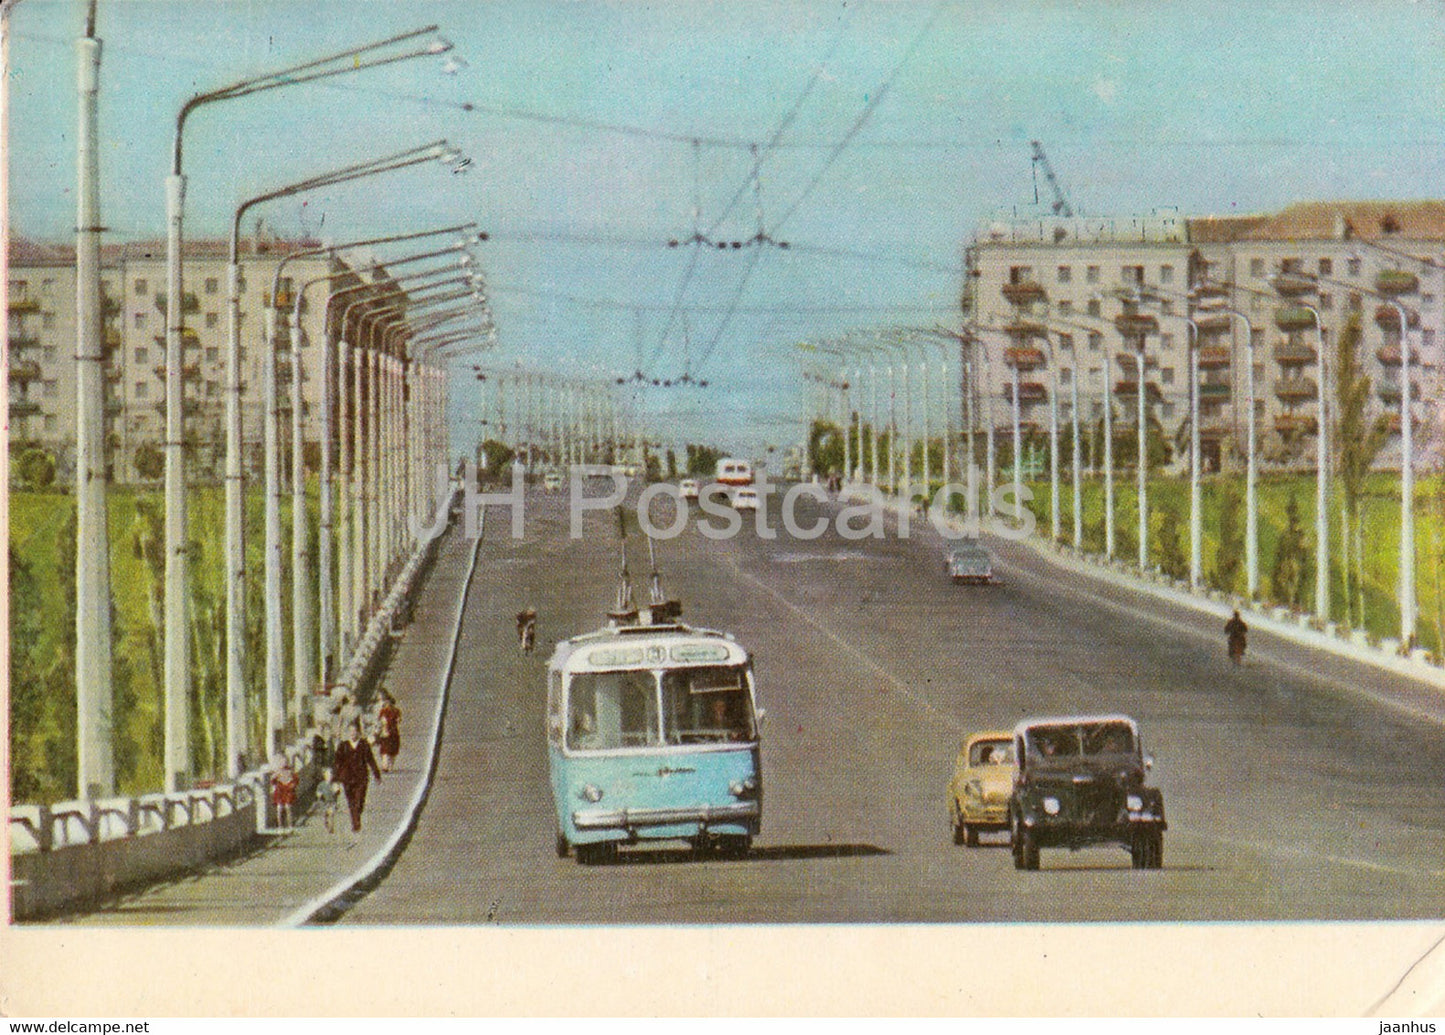 Zaporizhzhia - Dam - trolleybus - car - 1964 - Ukraine USSR - unused - JH Postcards